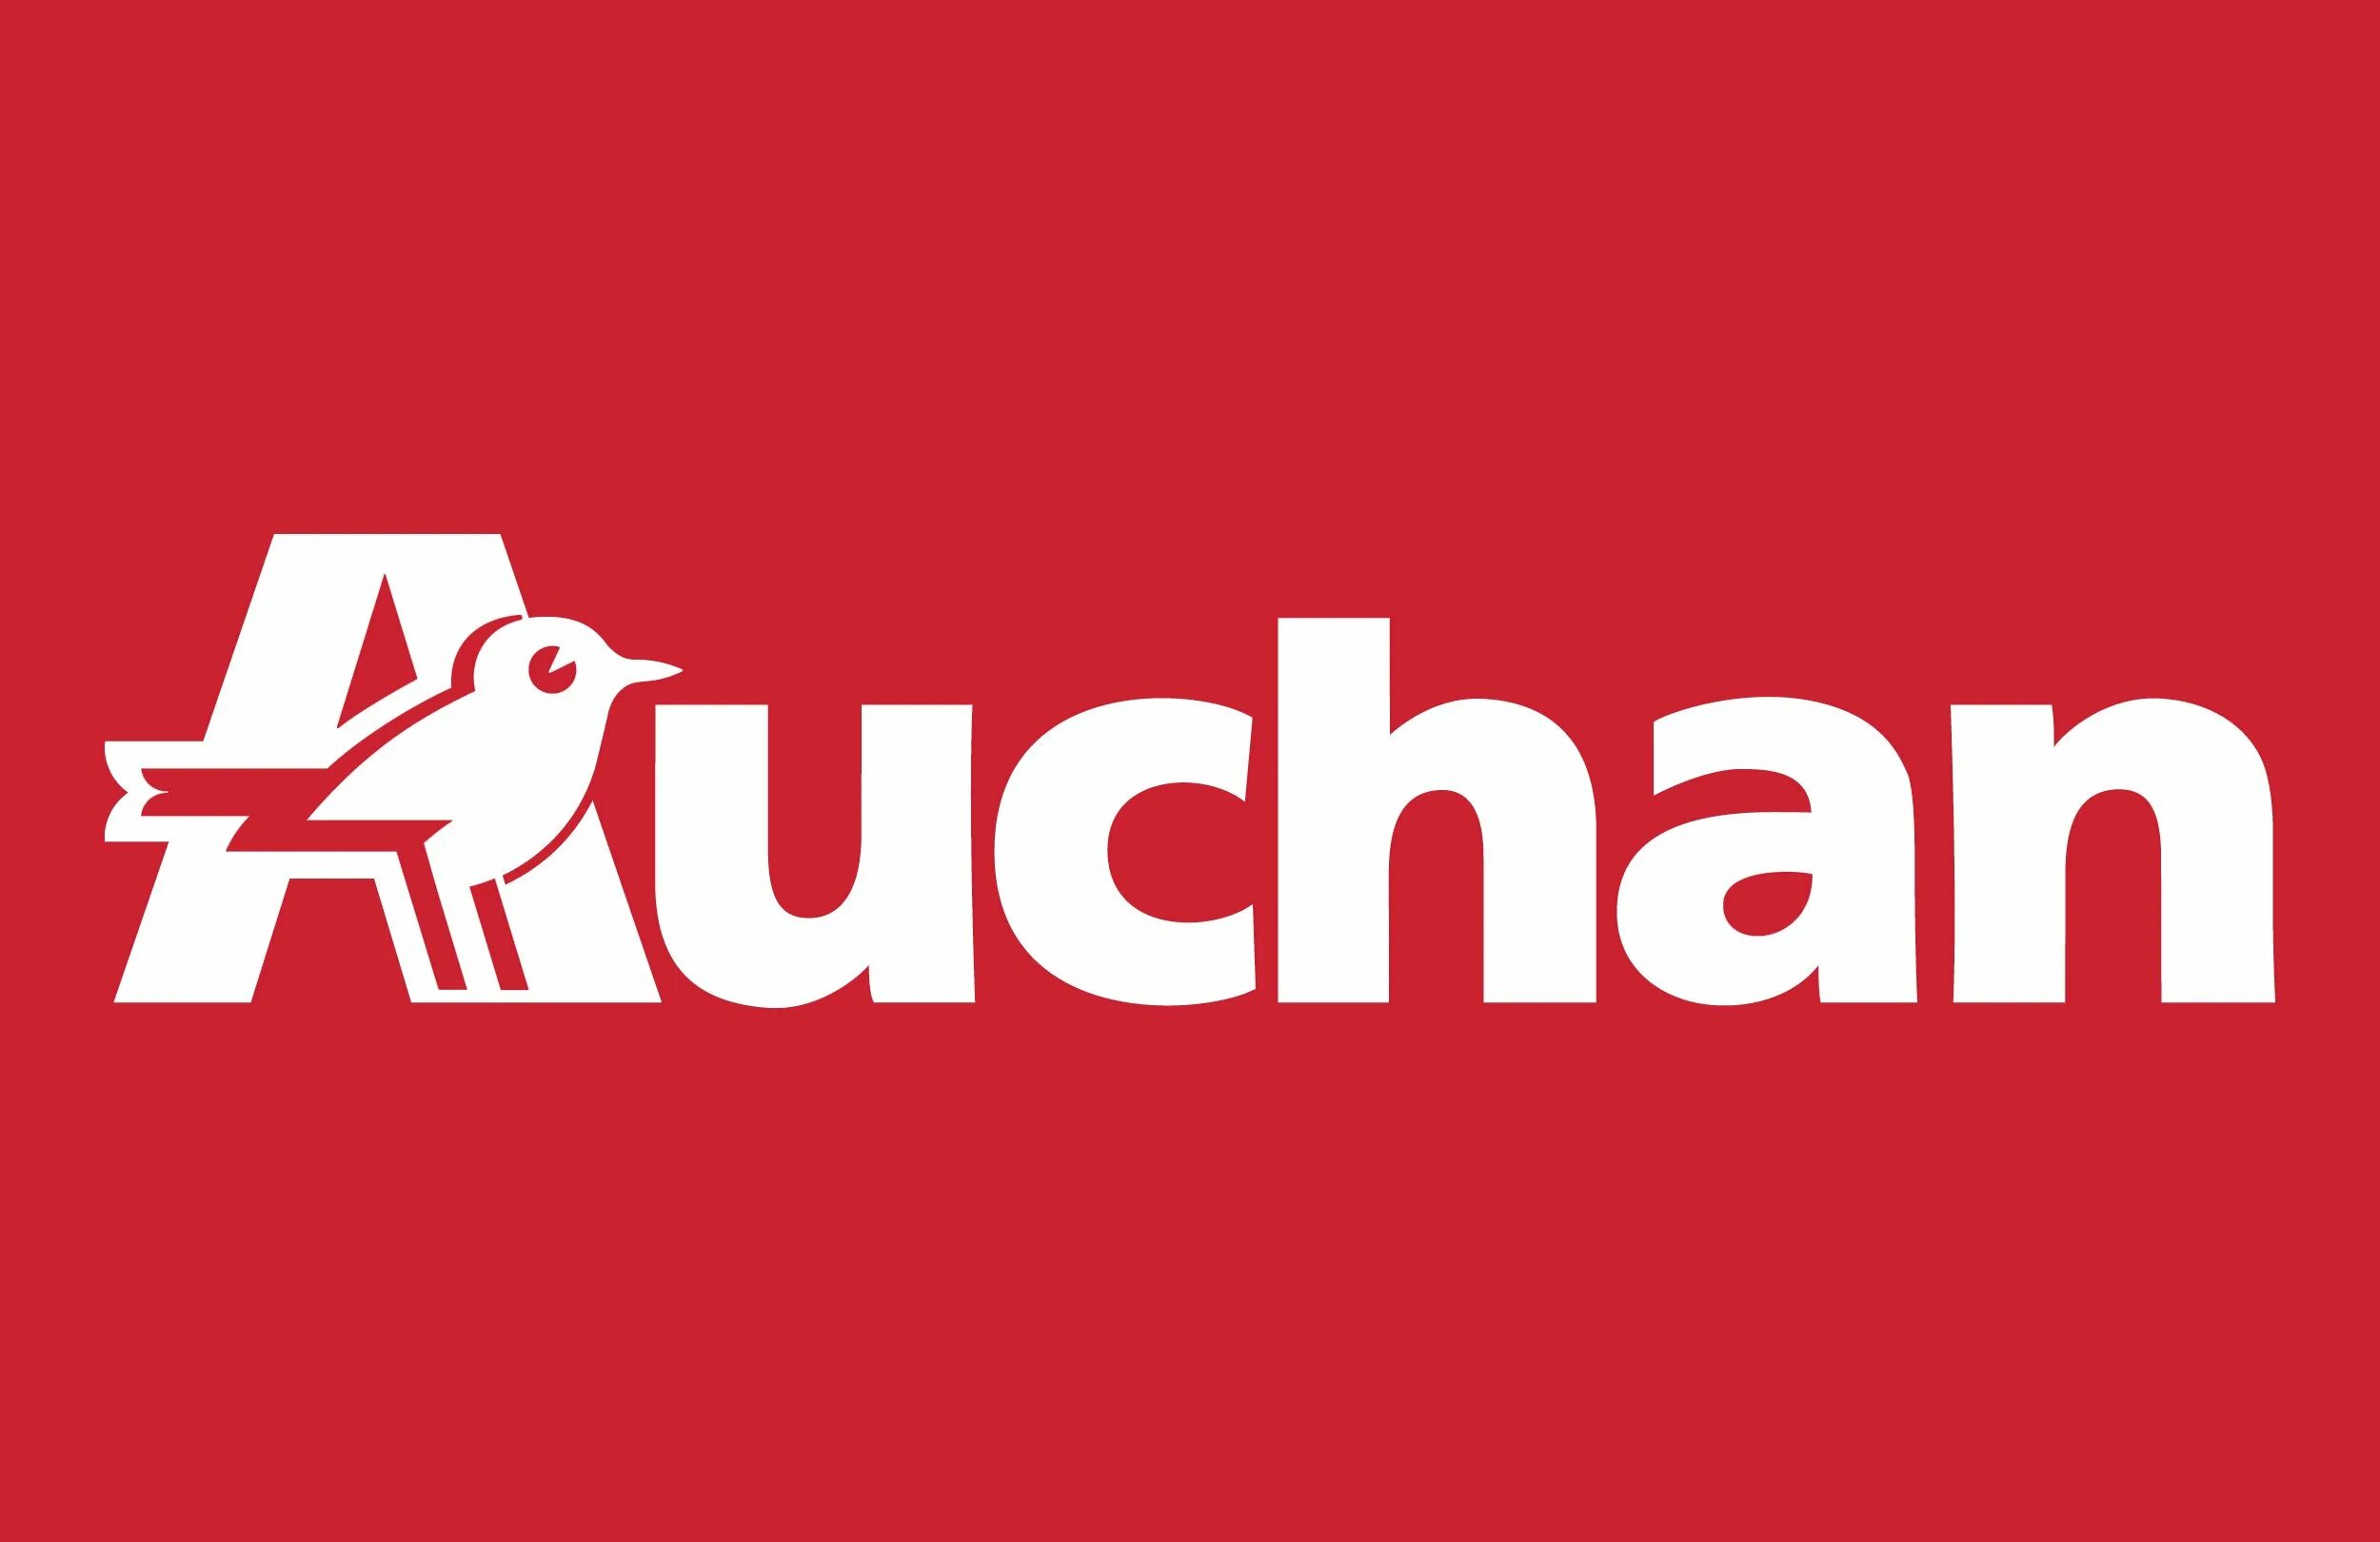 Auchan logo. Auchan логотип. Ашан магазин логотип. Ашан логотип вектор. Ашфелоготип.